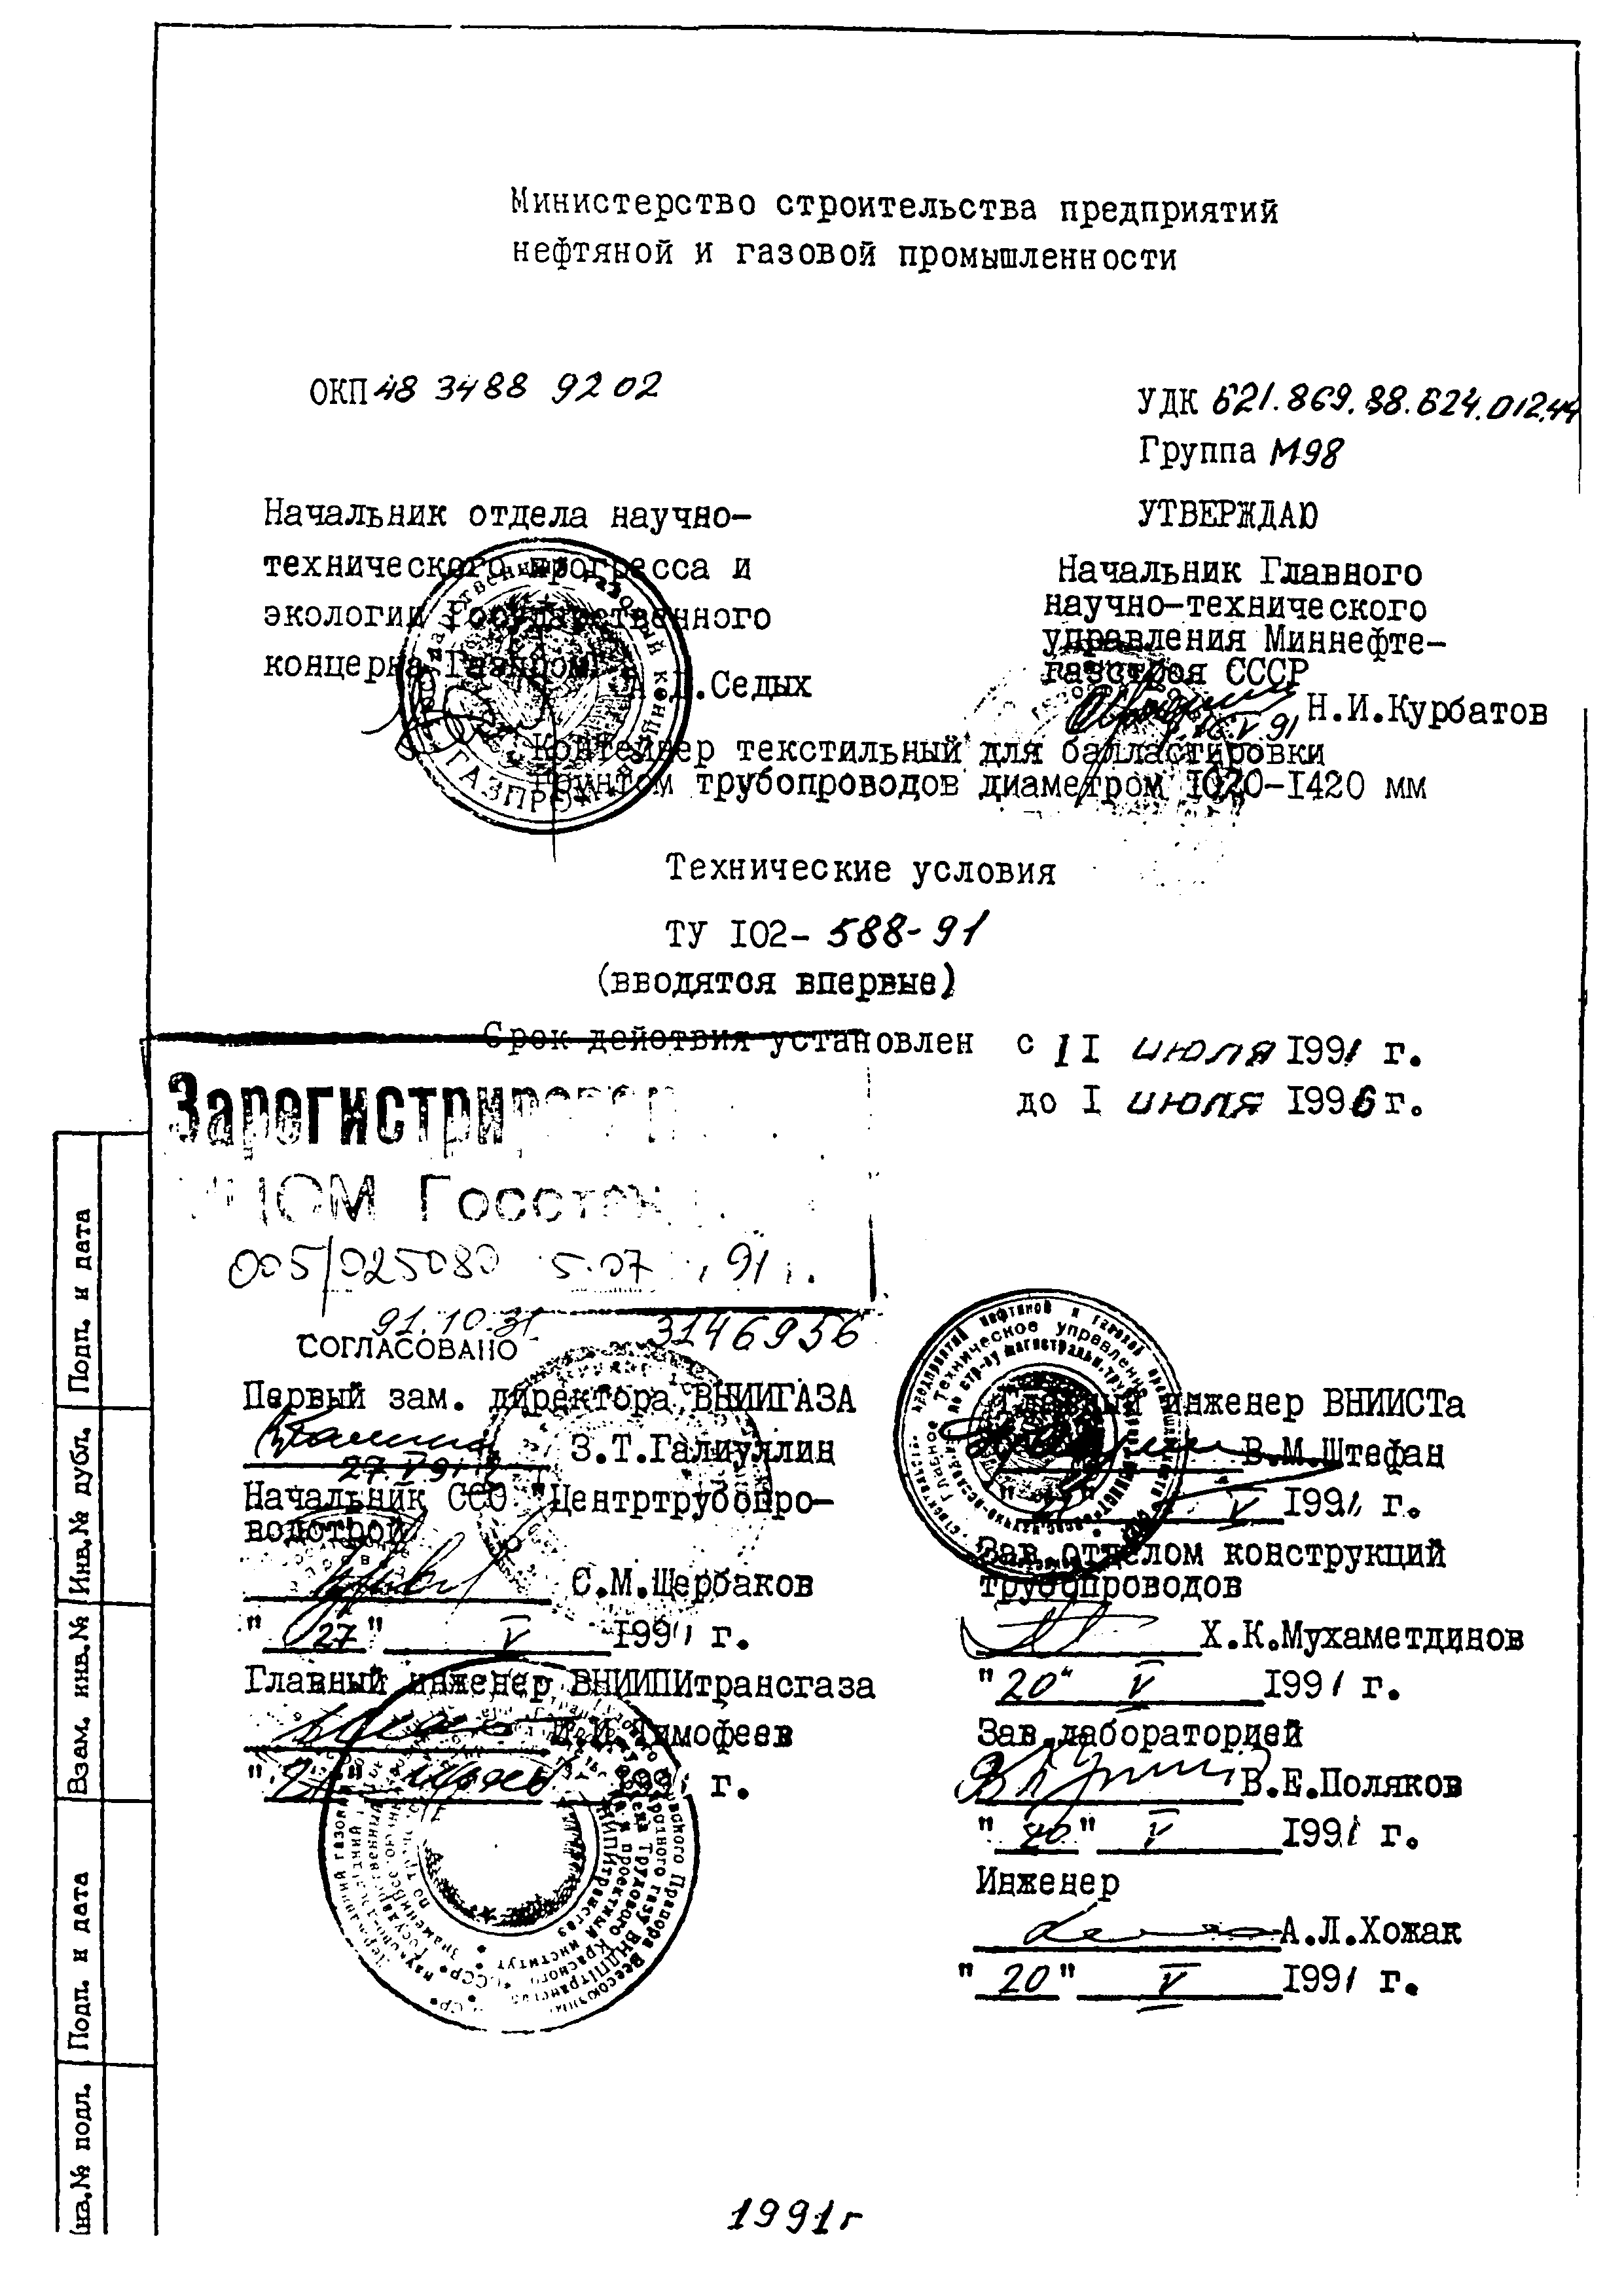 ТУ 102-588-91